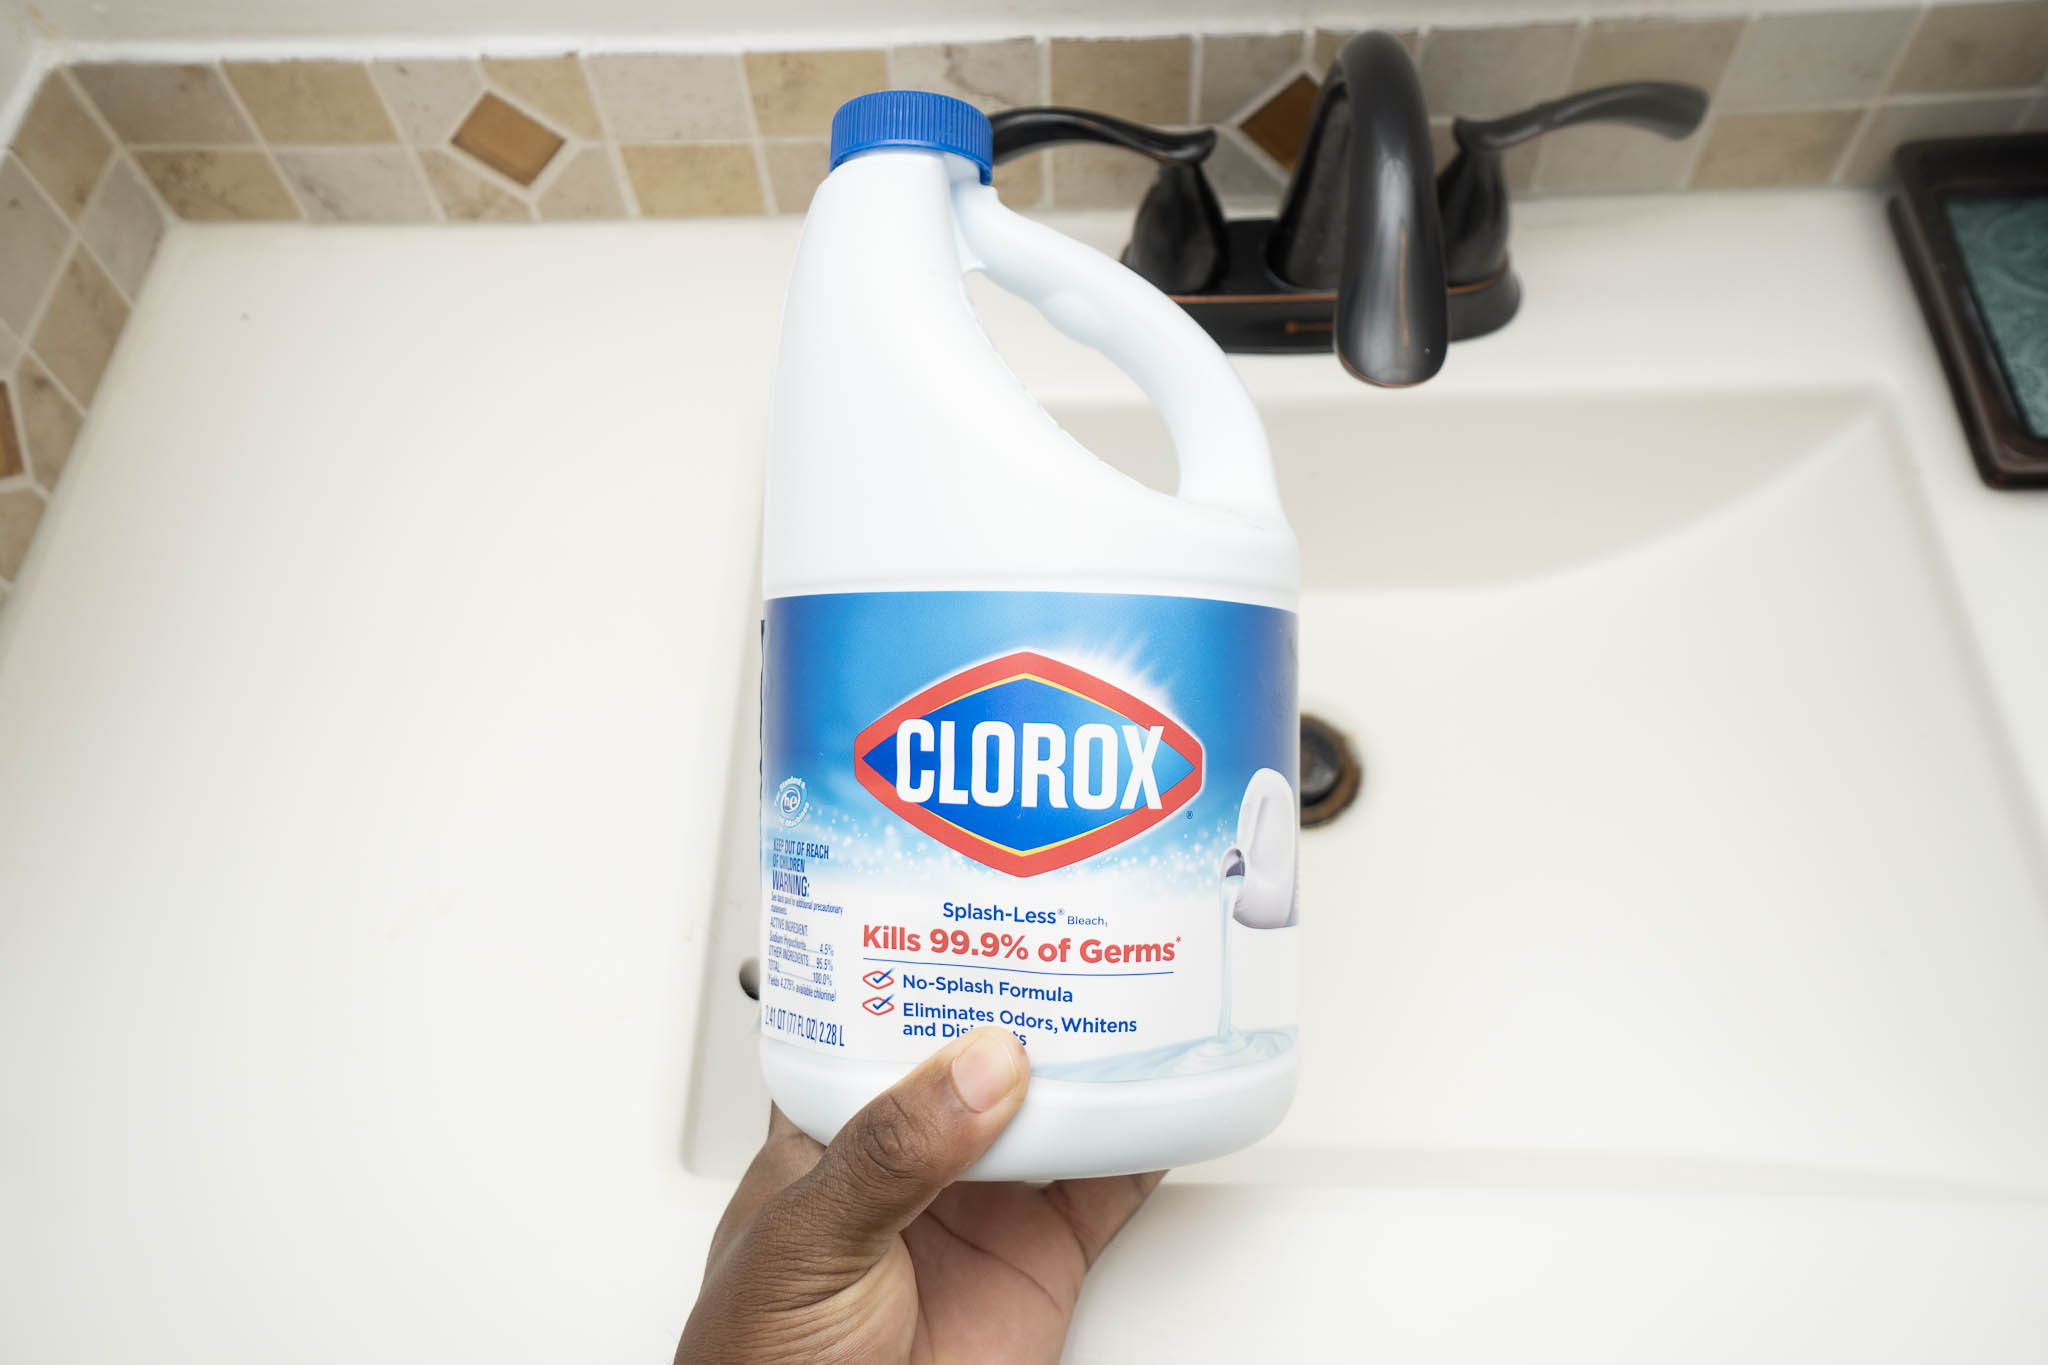 holding clorox bleach in hand